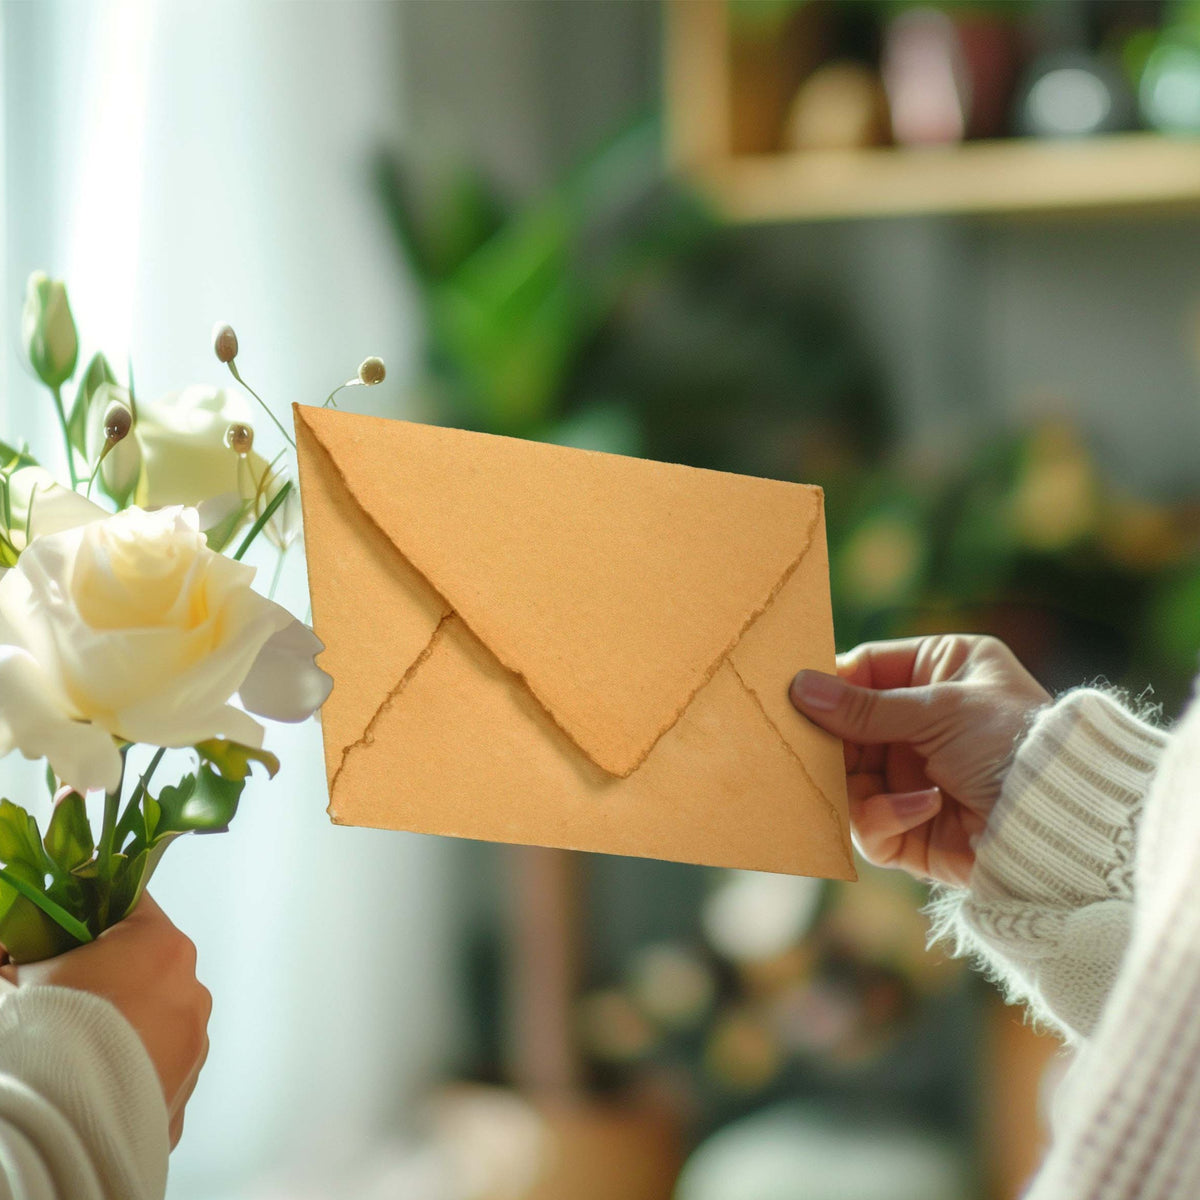 Leather Village 25 Packs Envelopes | 200 GSM | Vintage/Antique Envelope for Invitations, Printable, for Weddings, Invitations, Photos, Postcards, Greeting Cards, Mailing, Craft